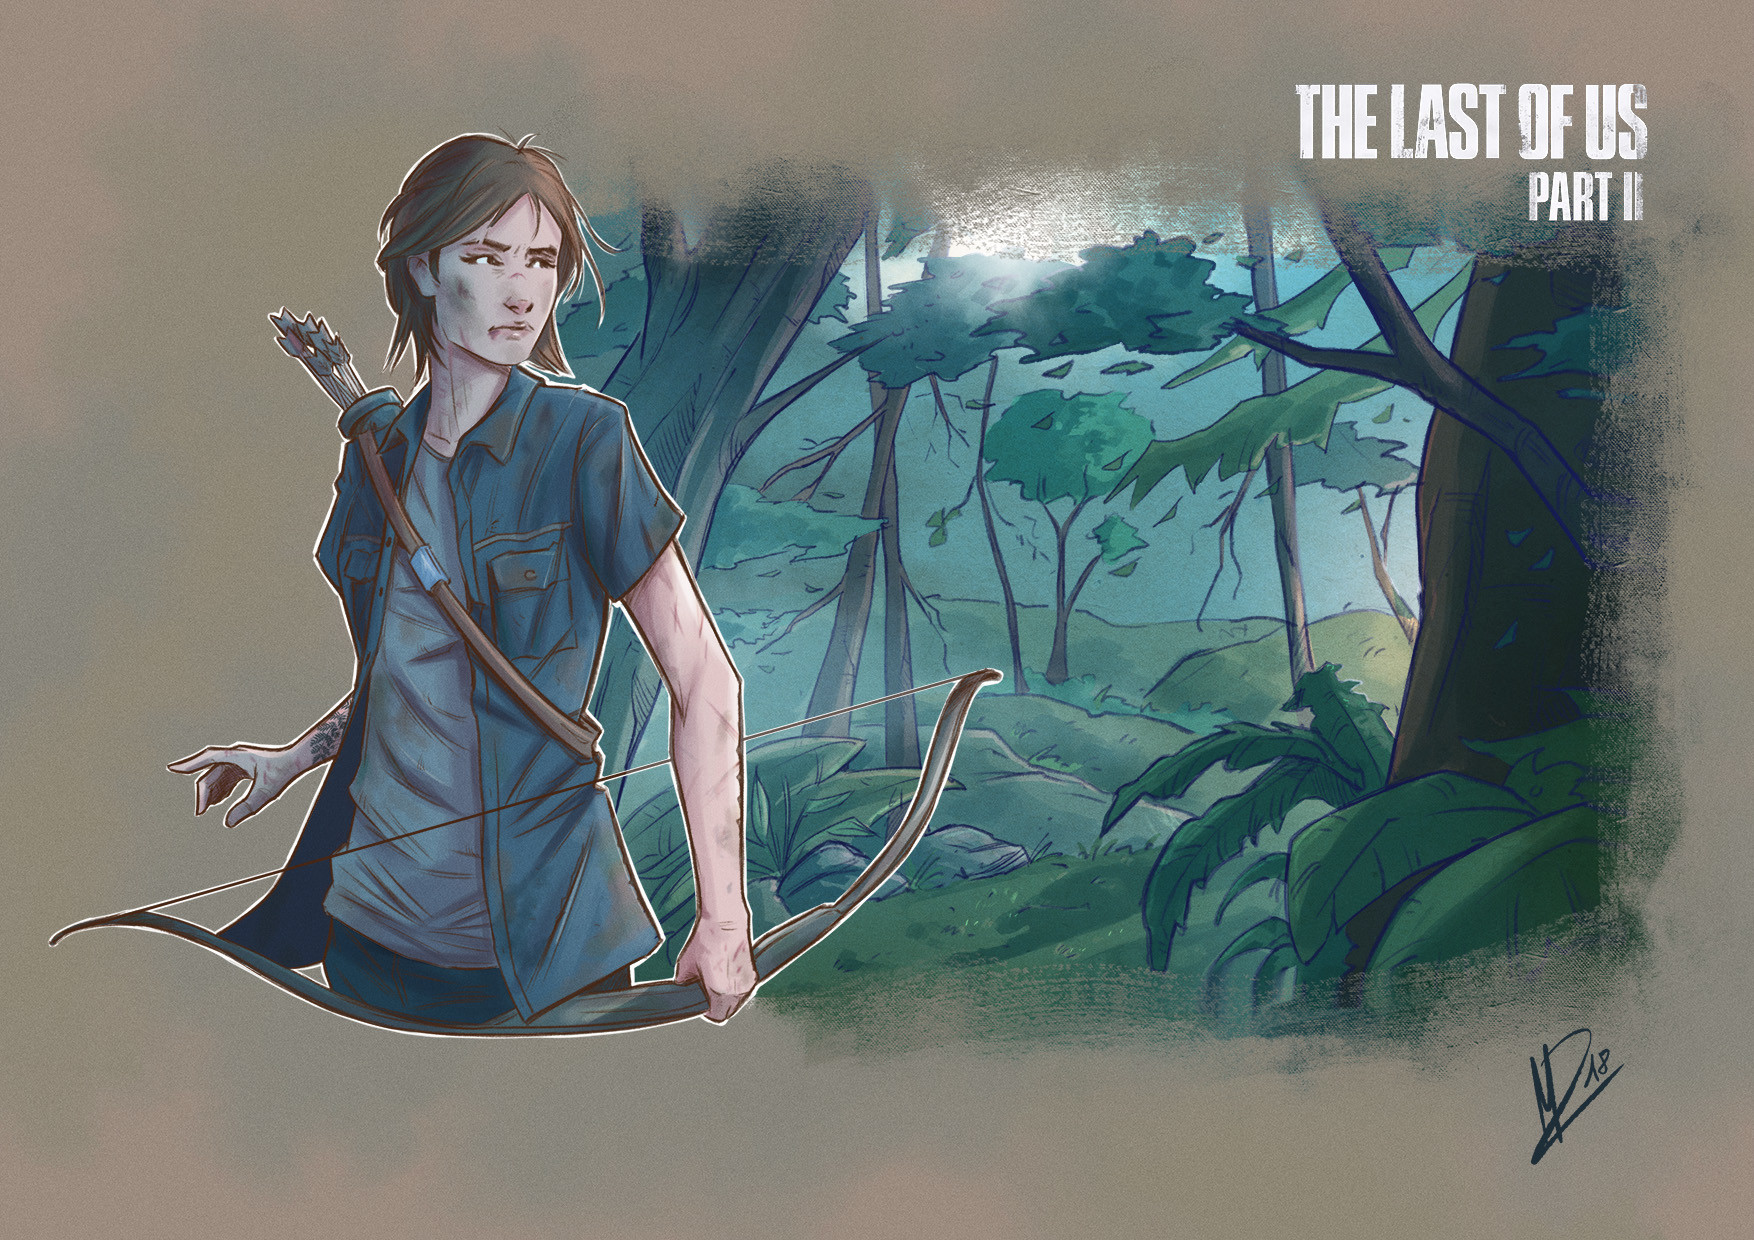 ArtStation - Ellie - The Last of Us Part II FANART